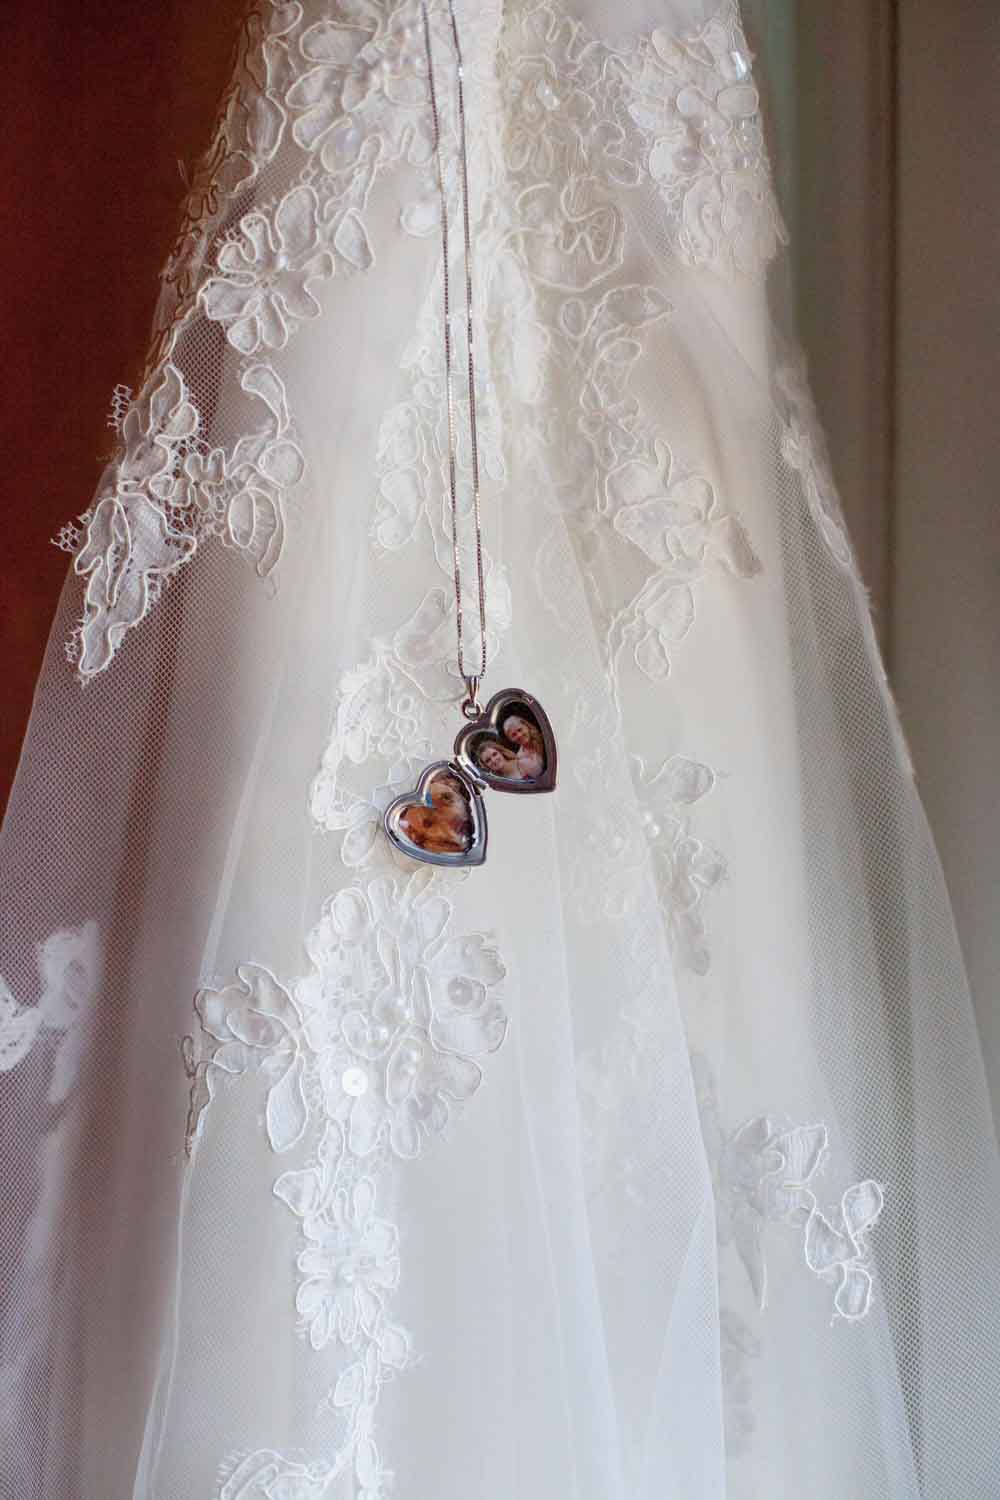 heart locket with photos inside next to wedding dress